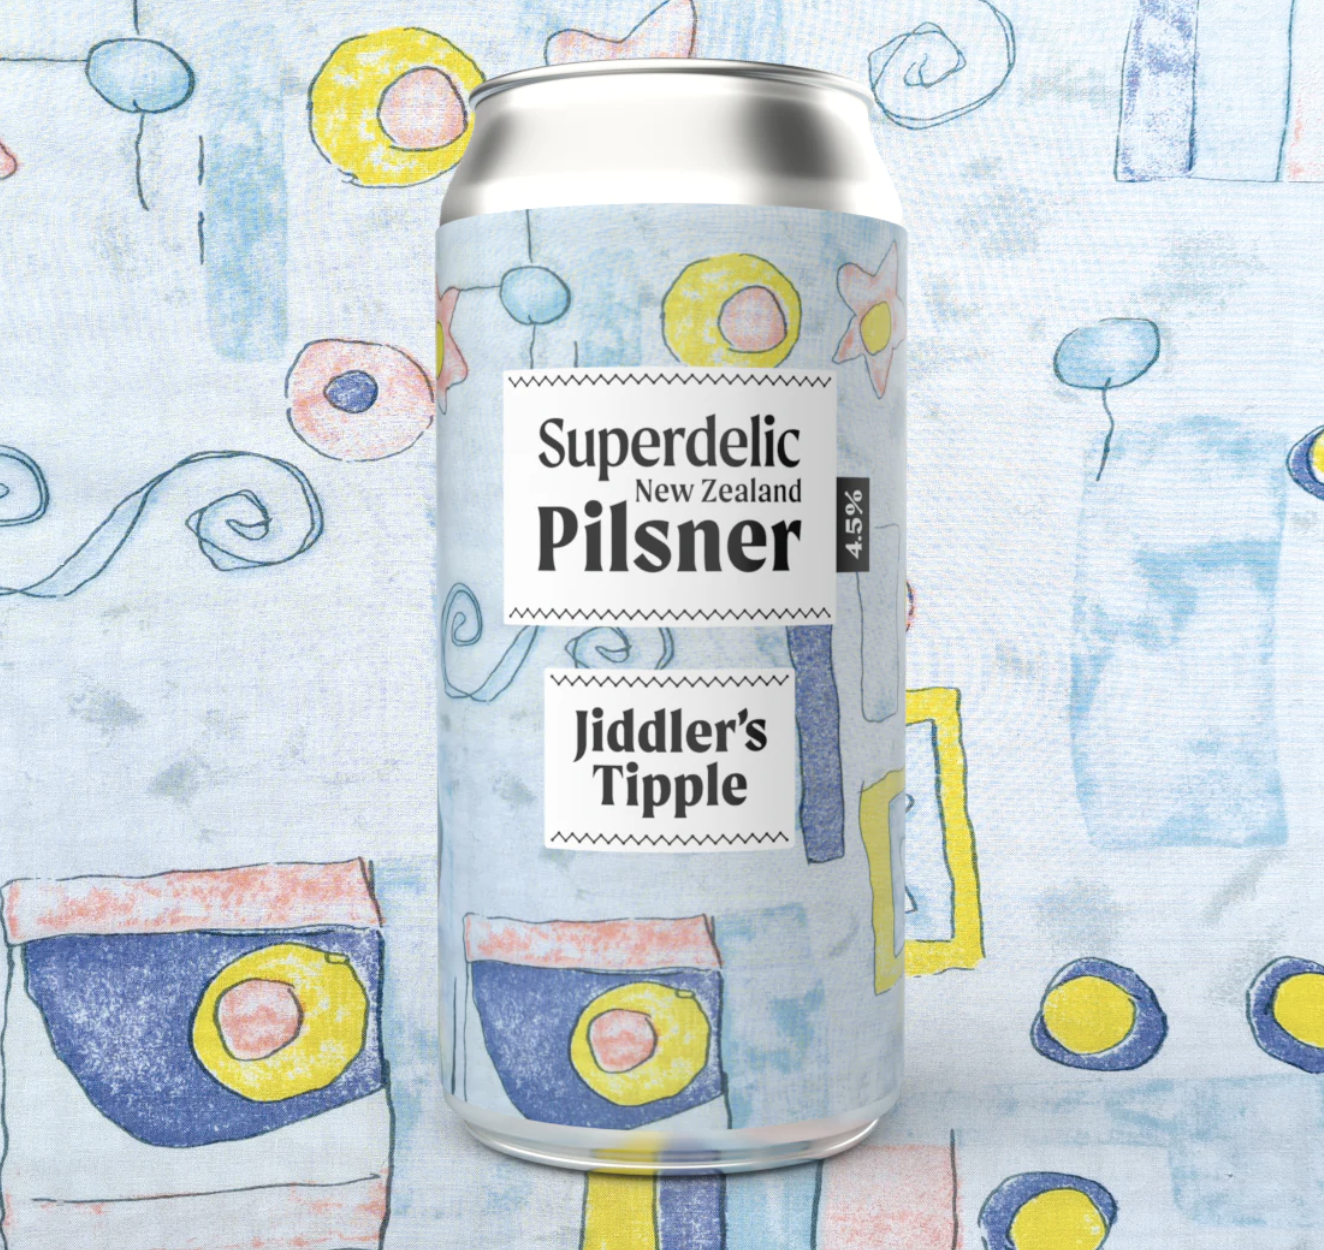 Jiddler's Tipple Superdelic New Zealand Pilsner 440ml